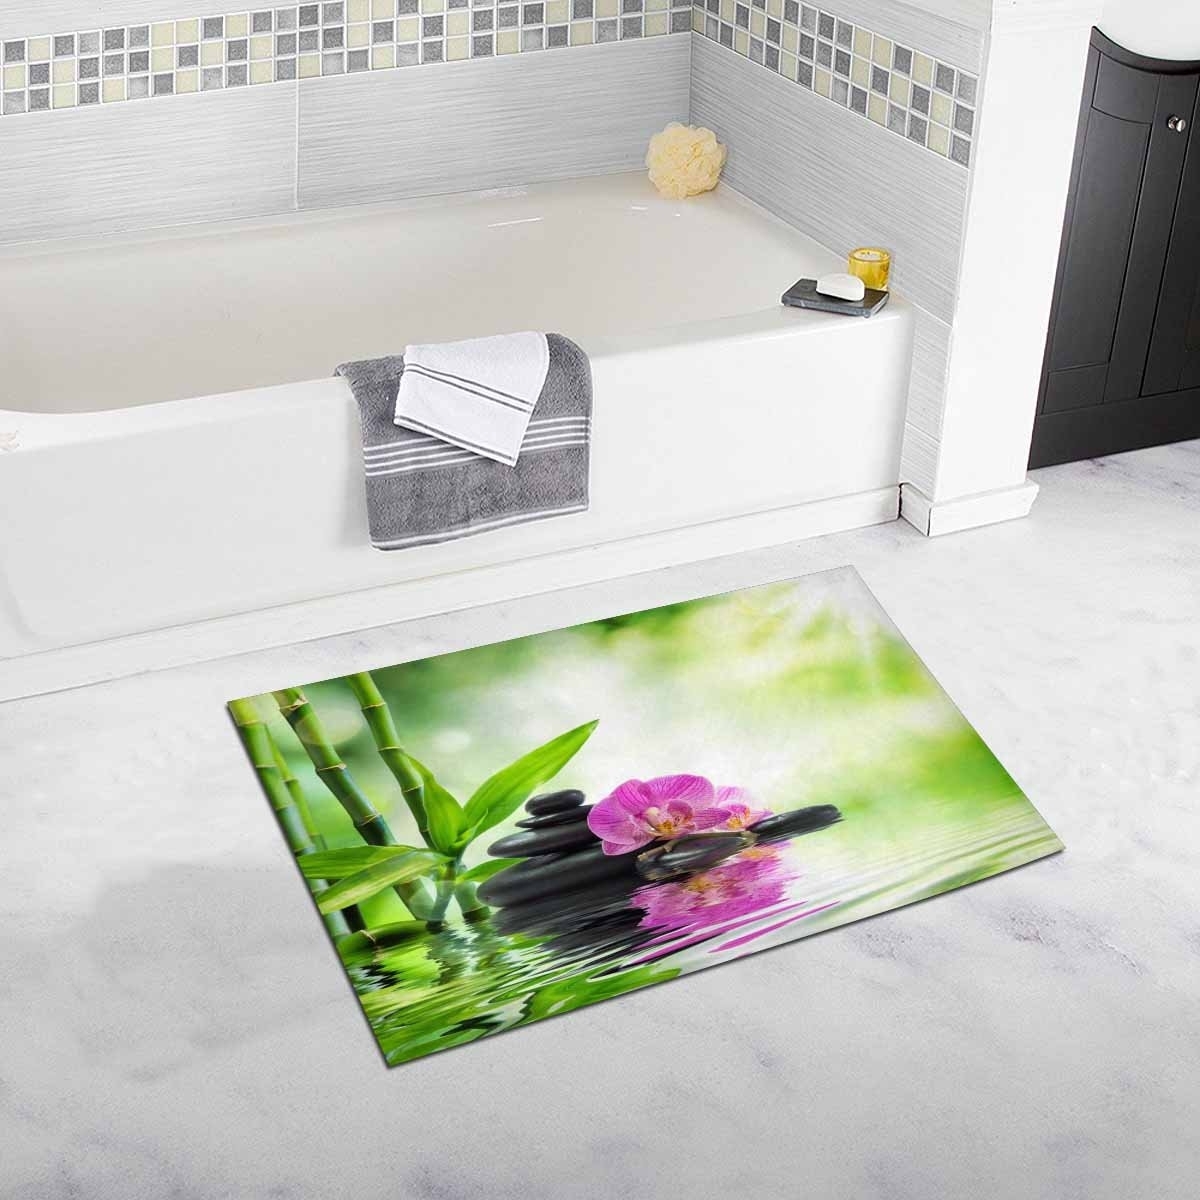 Popular Bath 846782 Floor Grey Soft Rug Super Bath mat